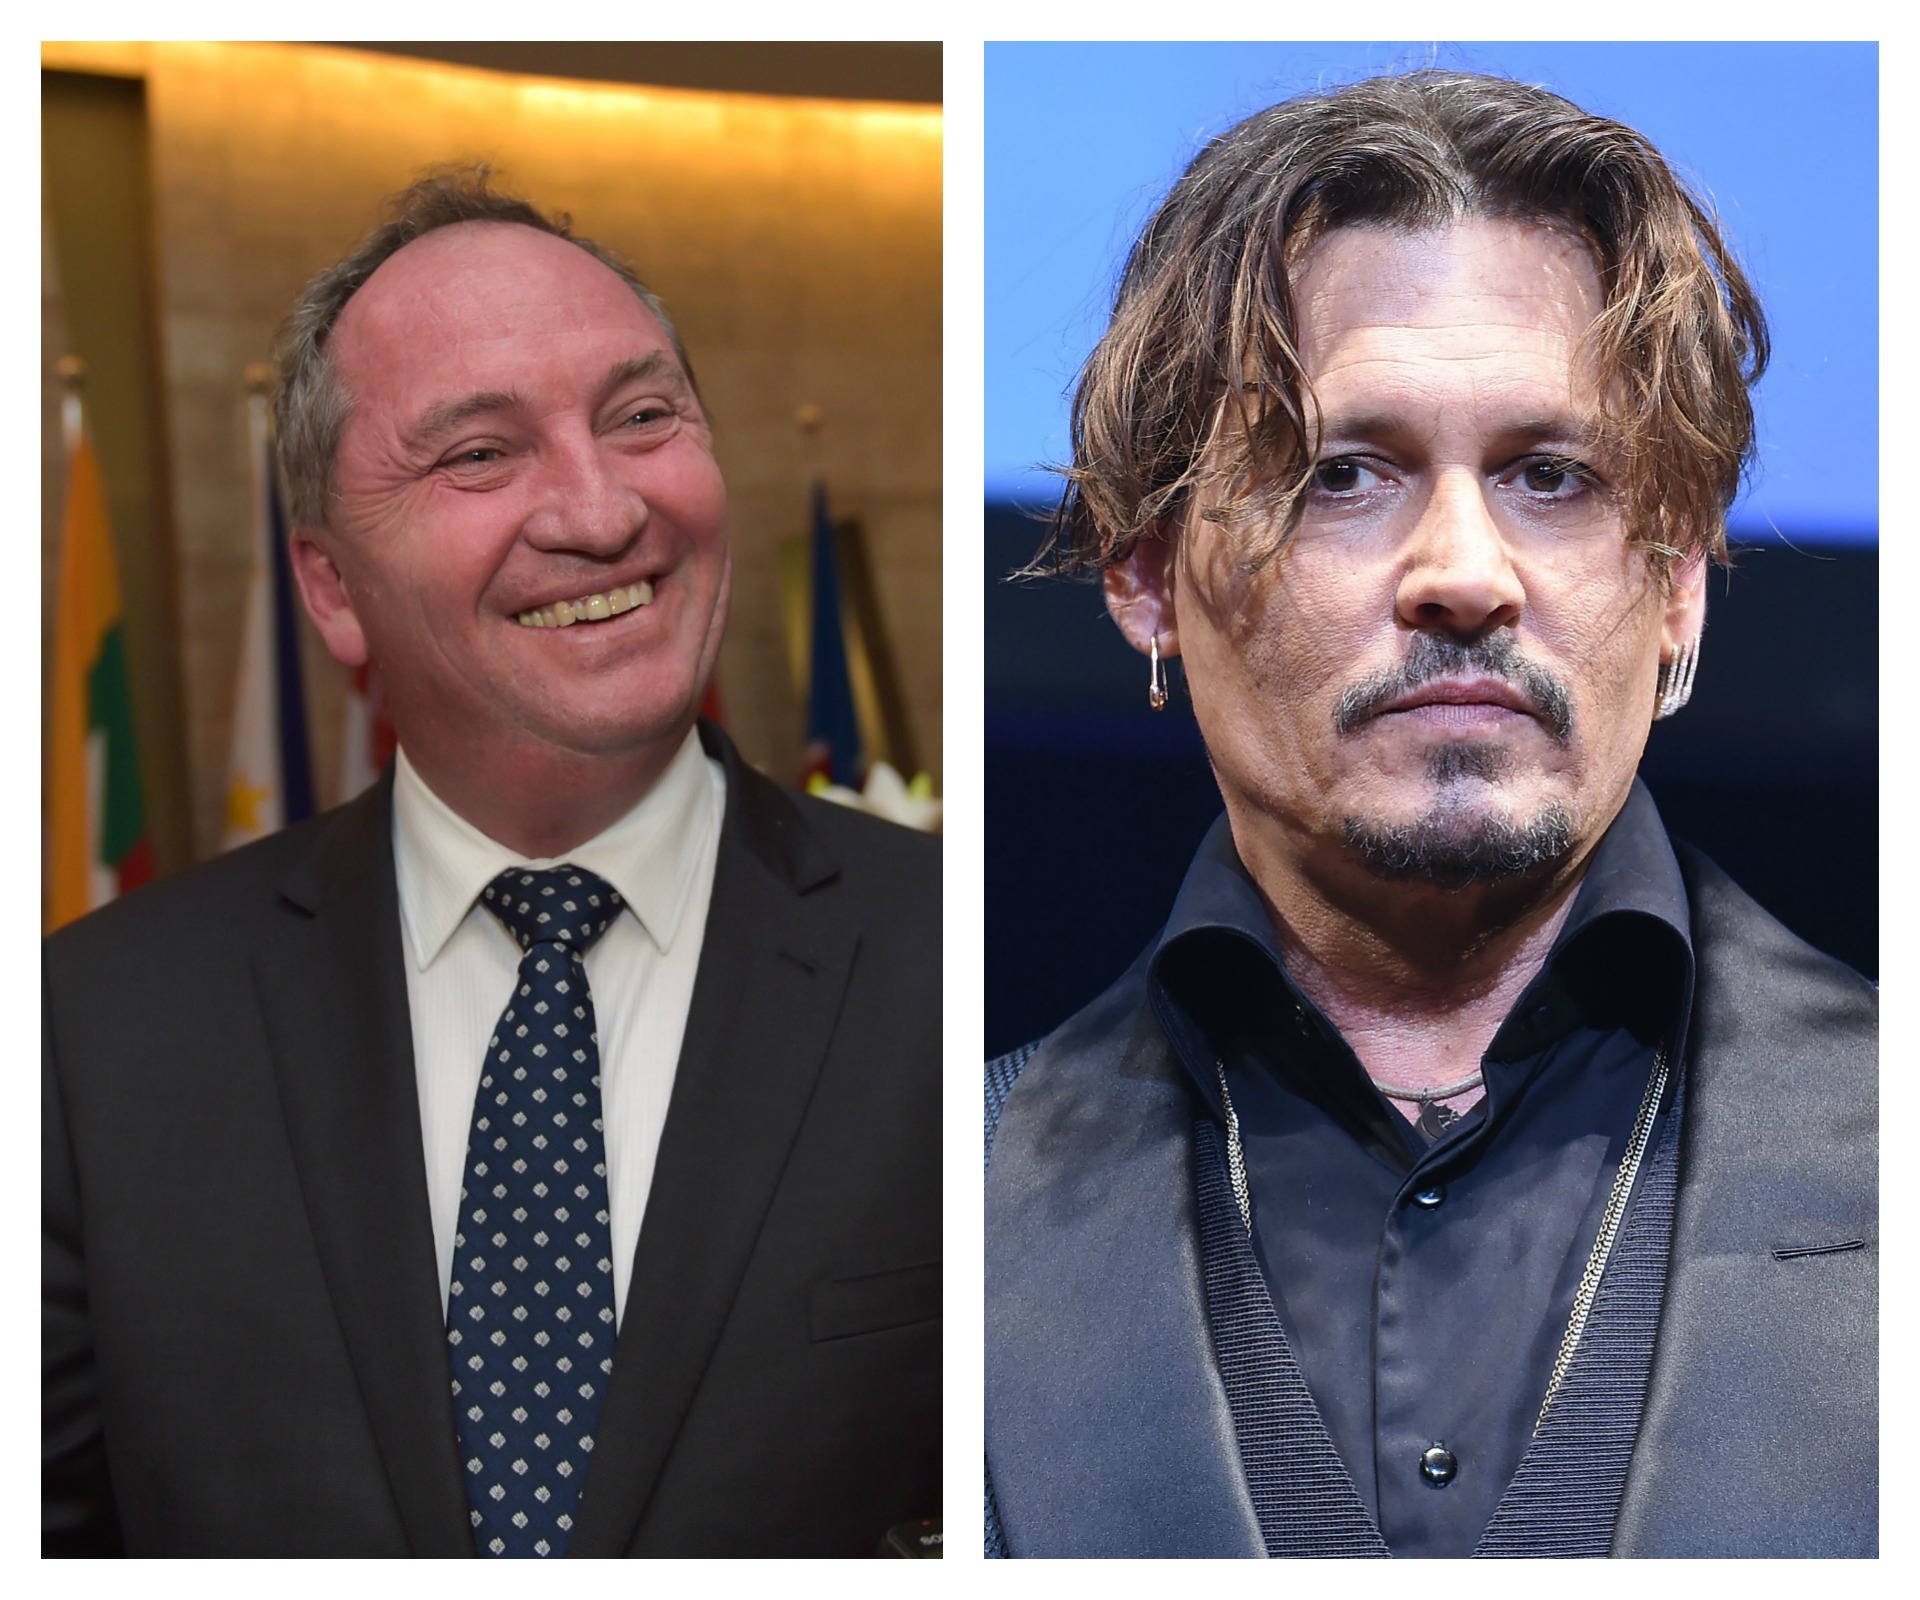 Barnaby Joyce takes aim at Johnny Depp: “He may have perjured himself”